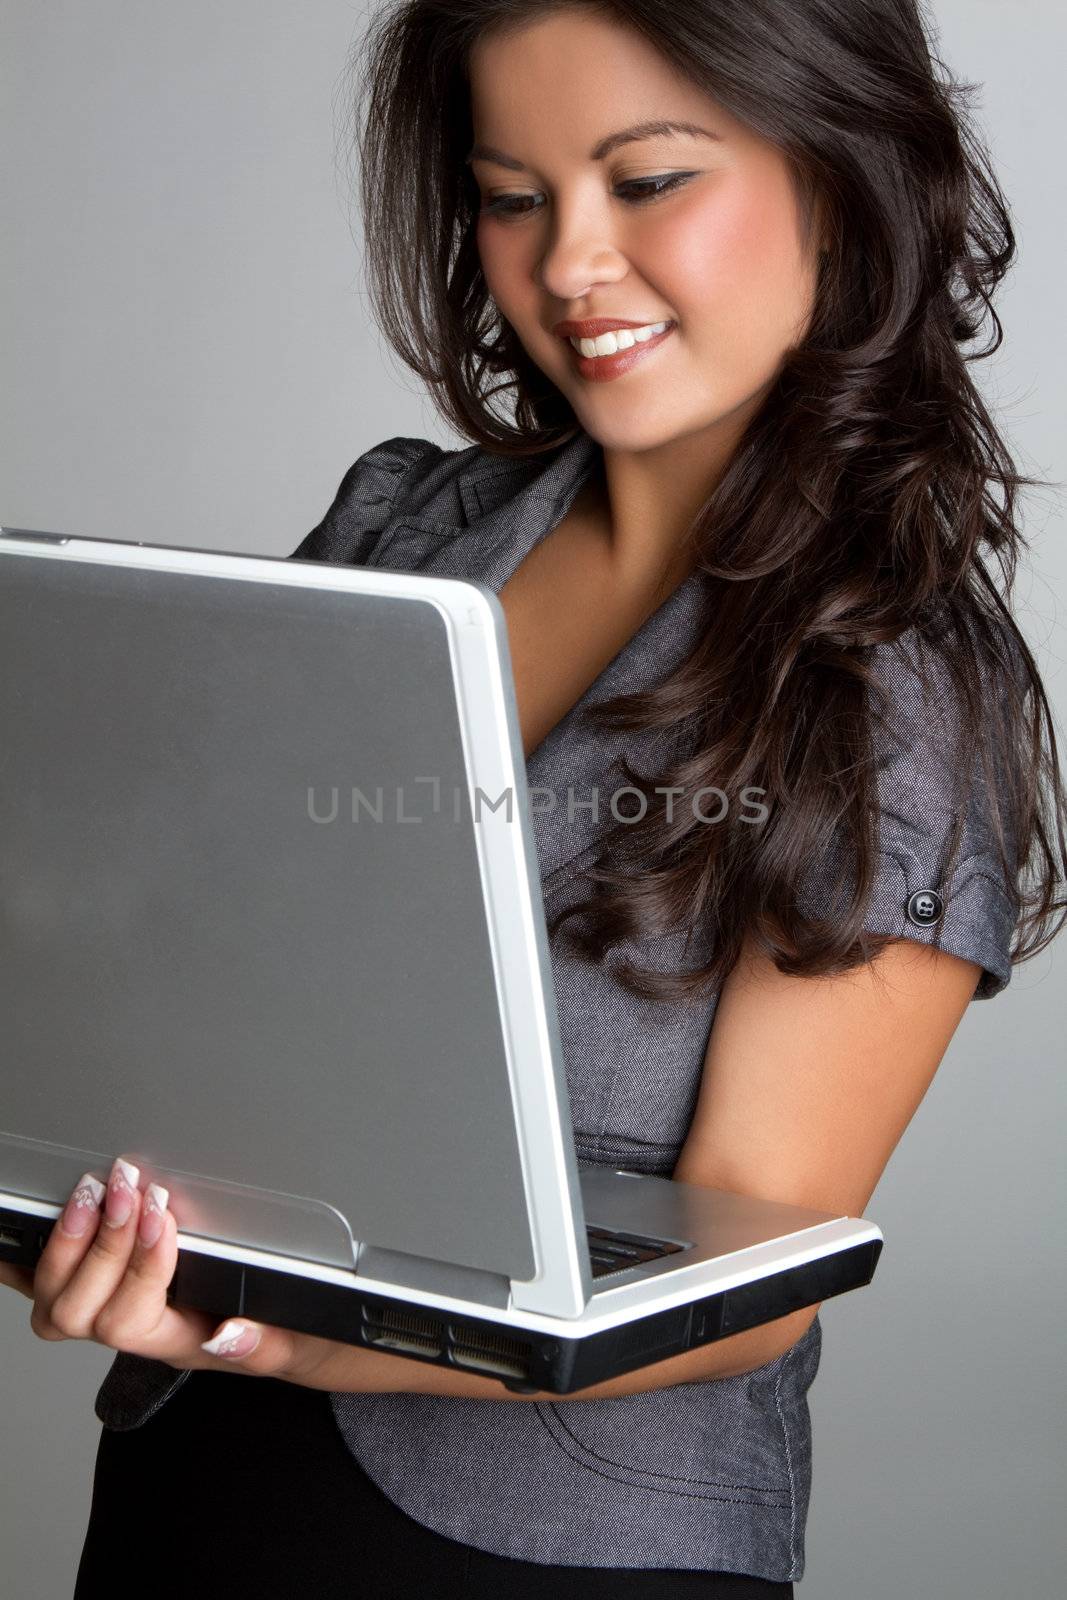 Laptop Woman by keeweeboy